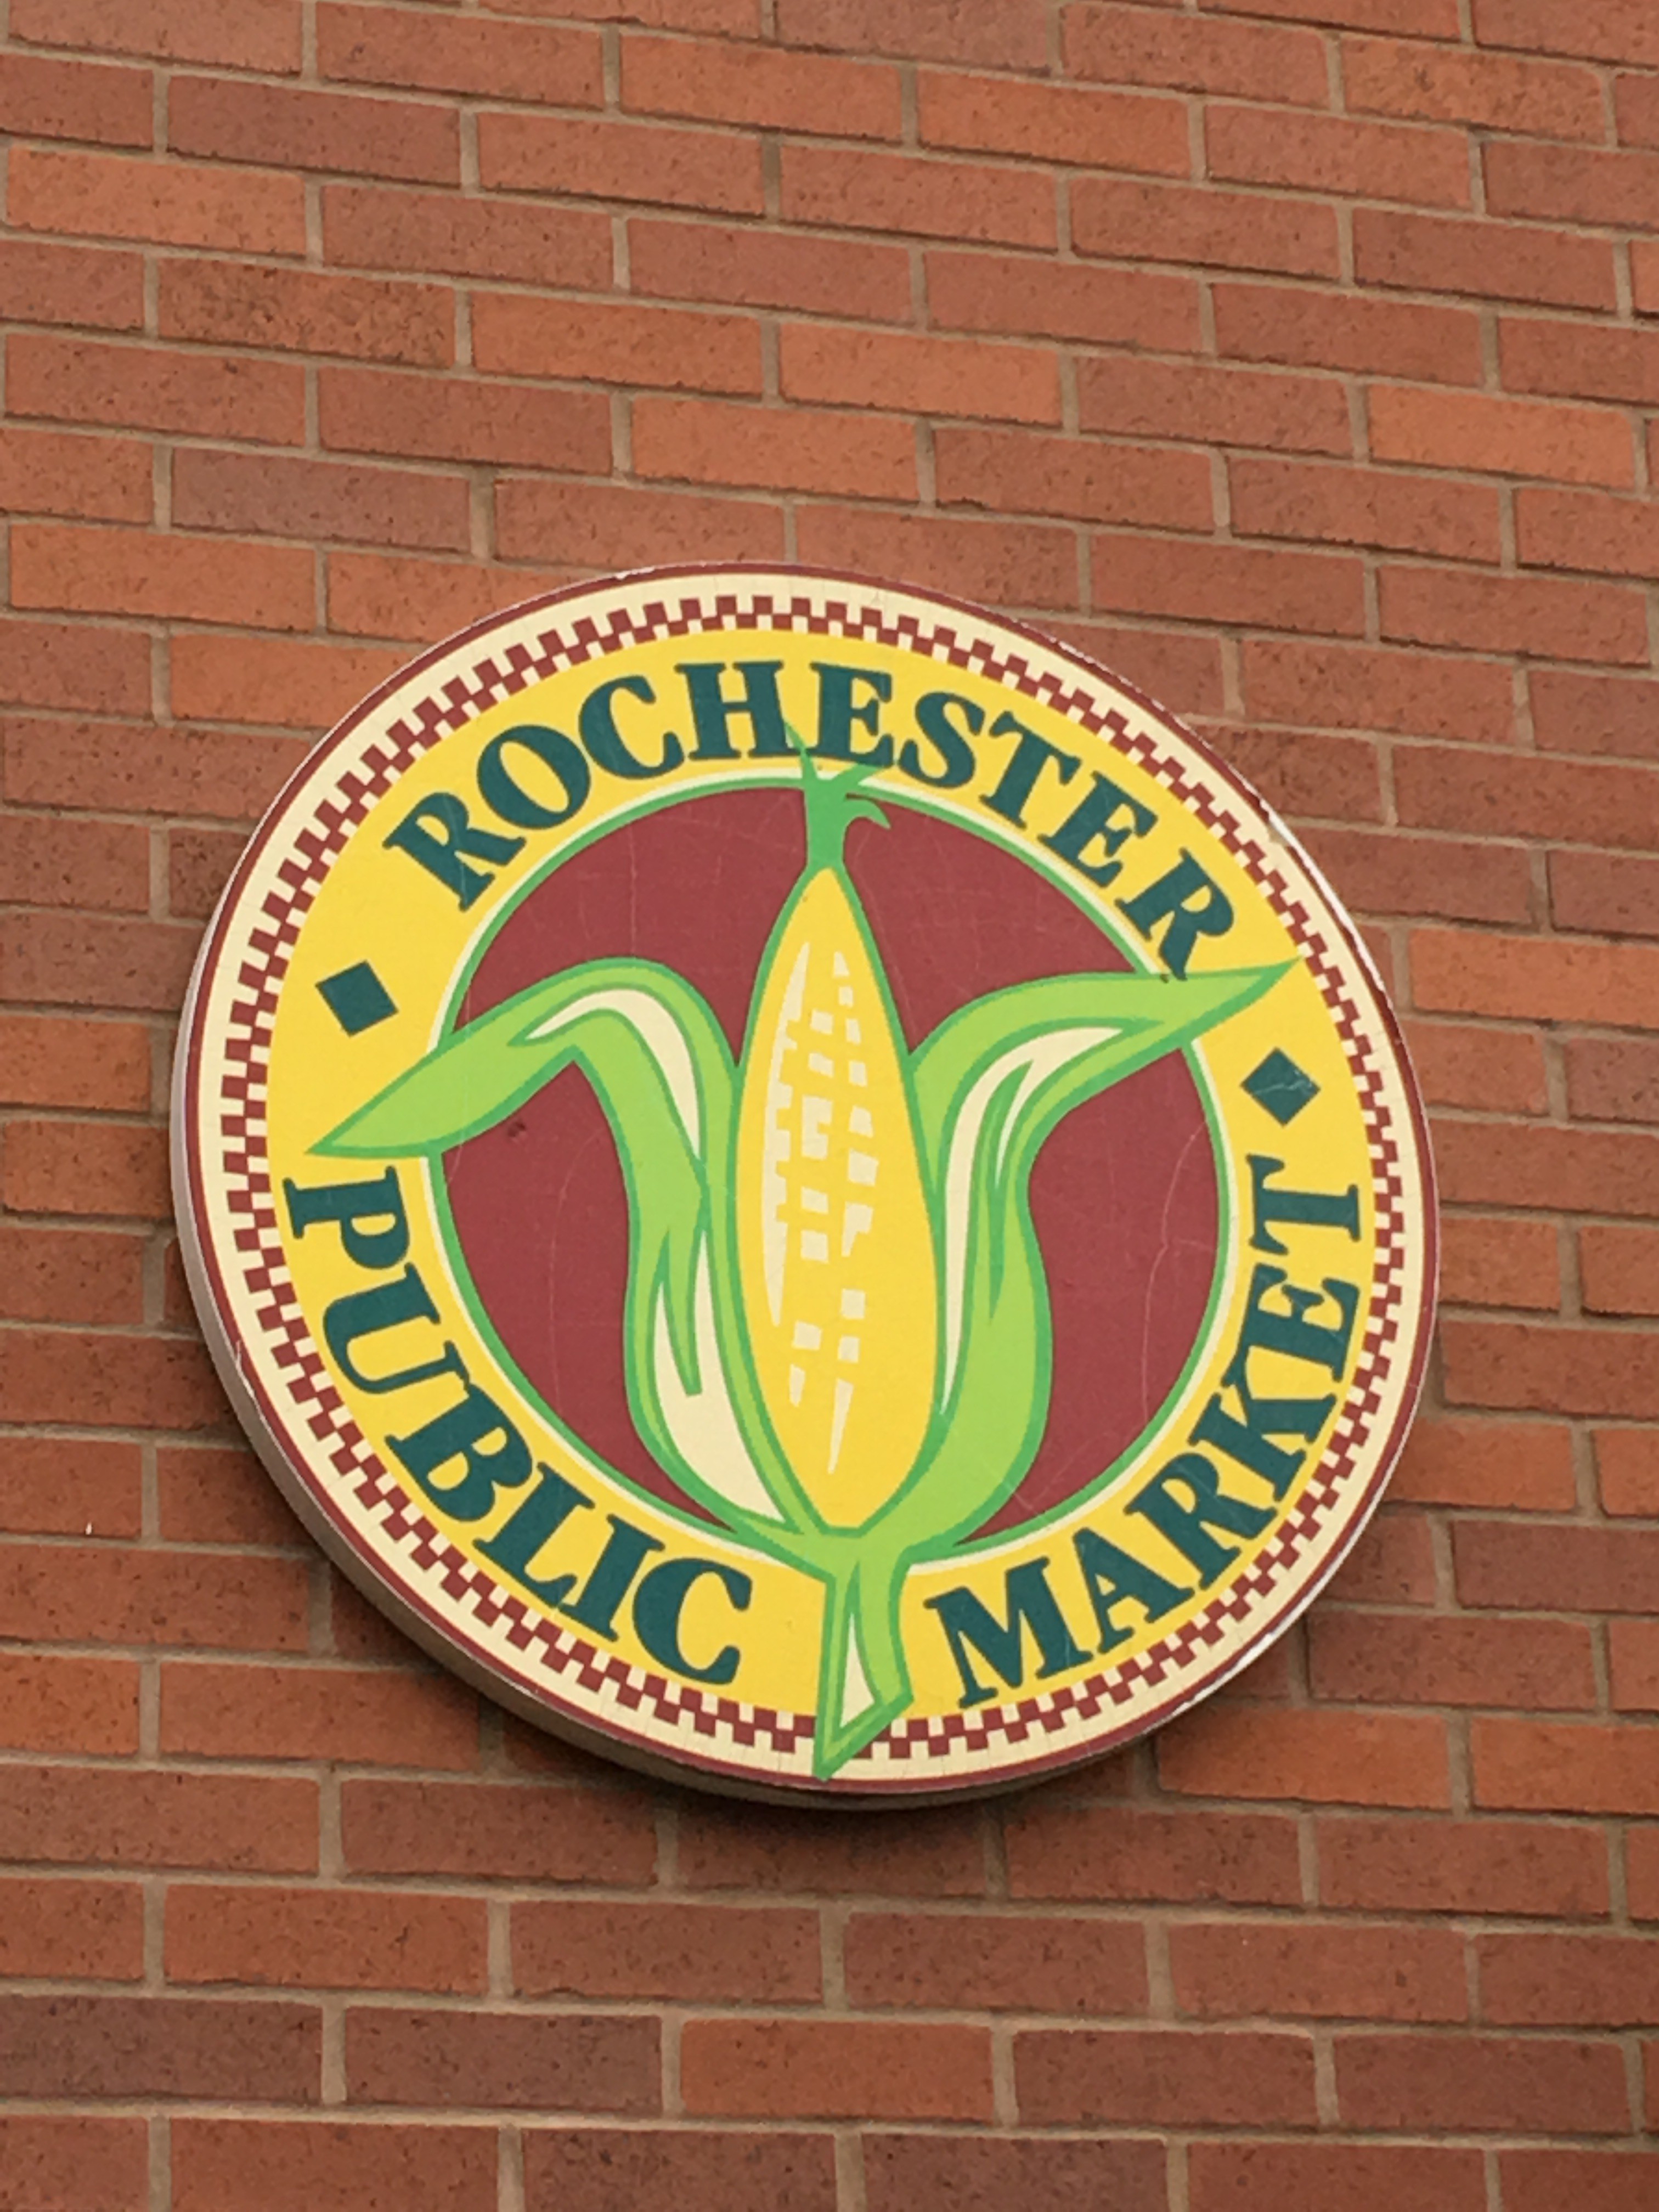 Rochester Public Market logo, an illustration of a corn cob